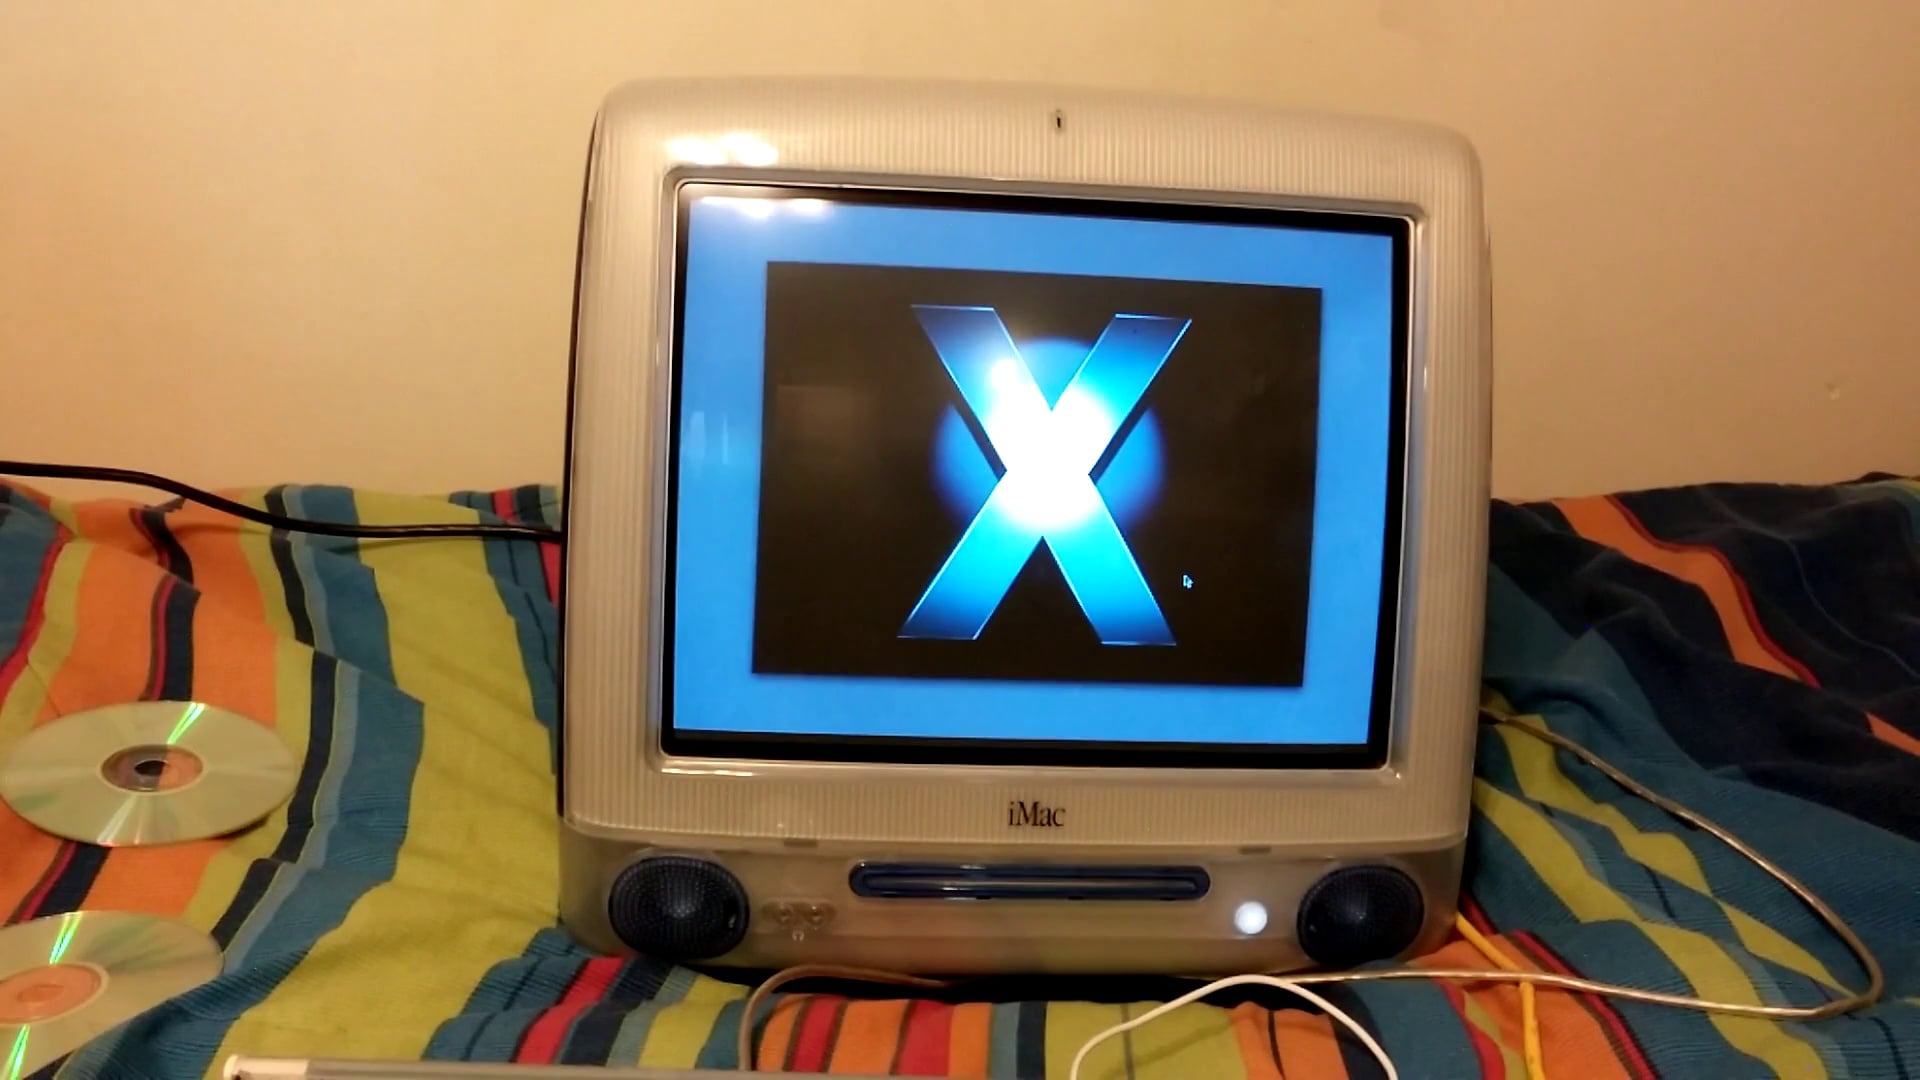 Installing OS X Tiger on an iMac G3